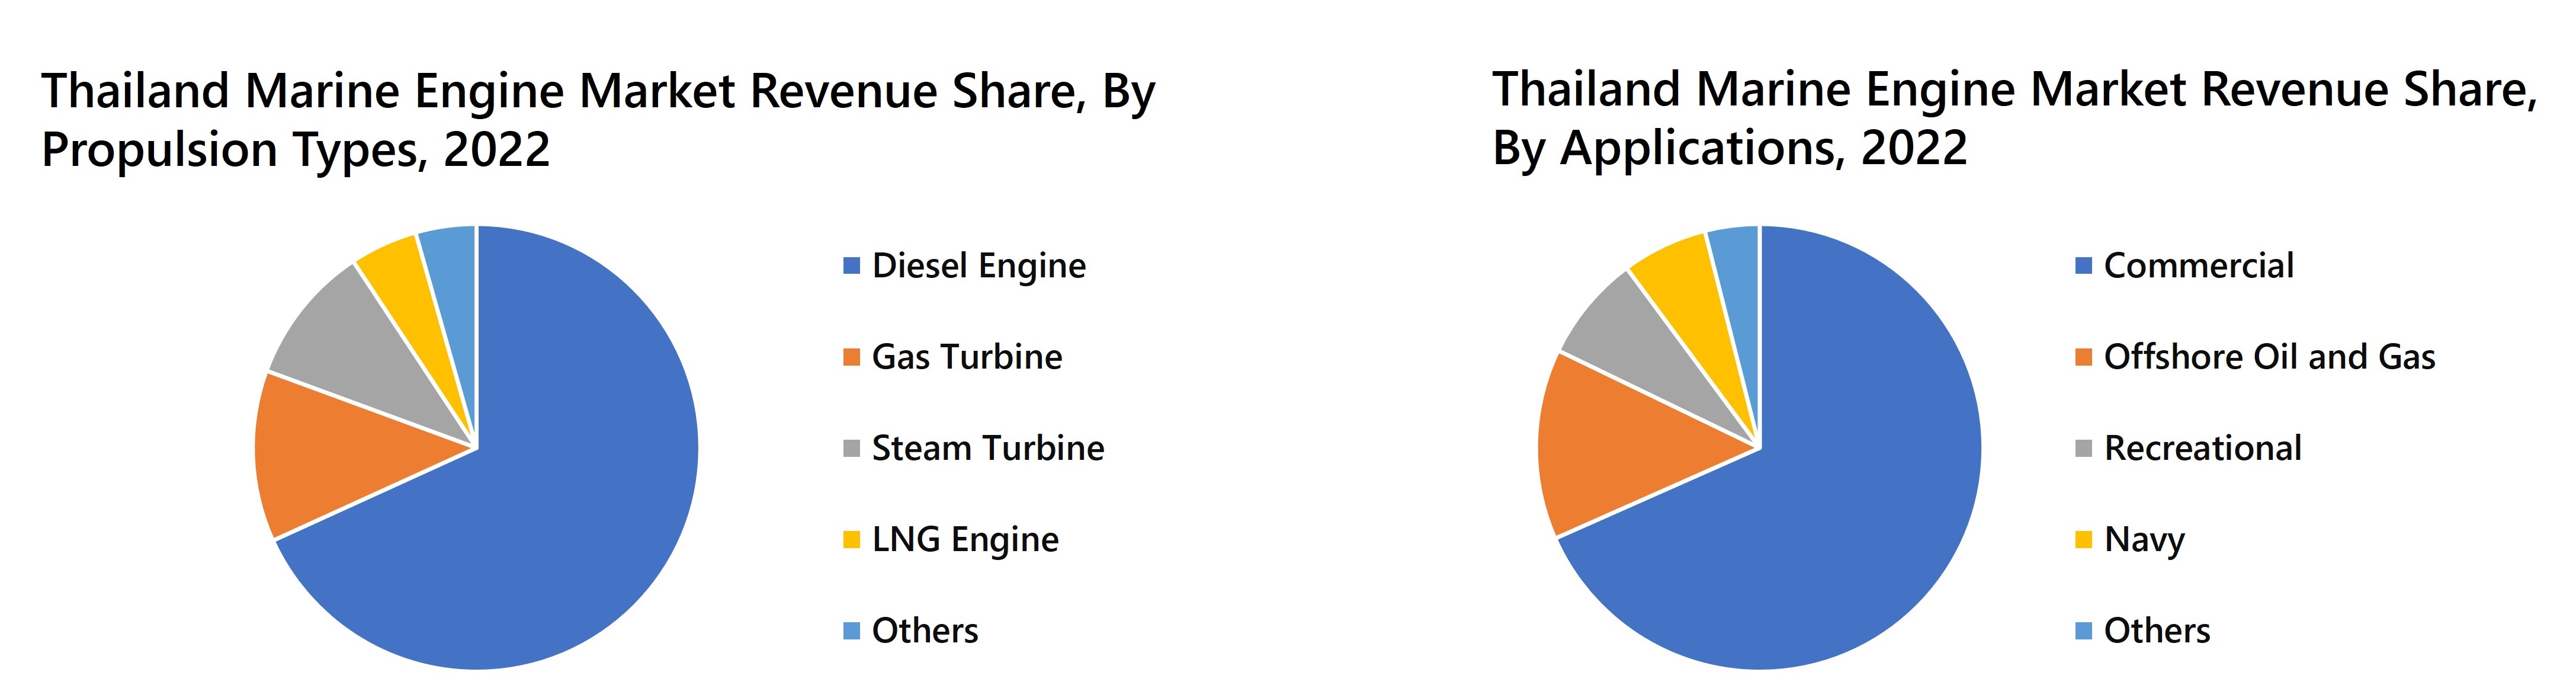 Thailand Marine Engine Market Revenue Share